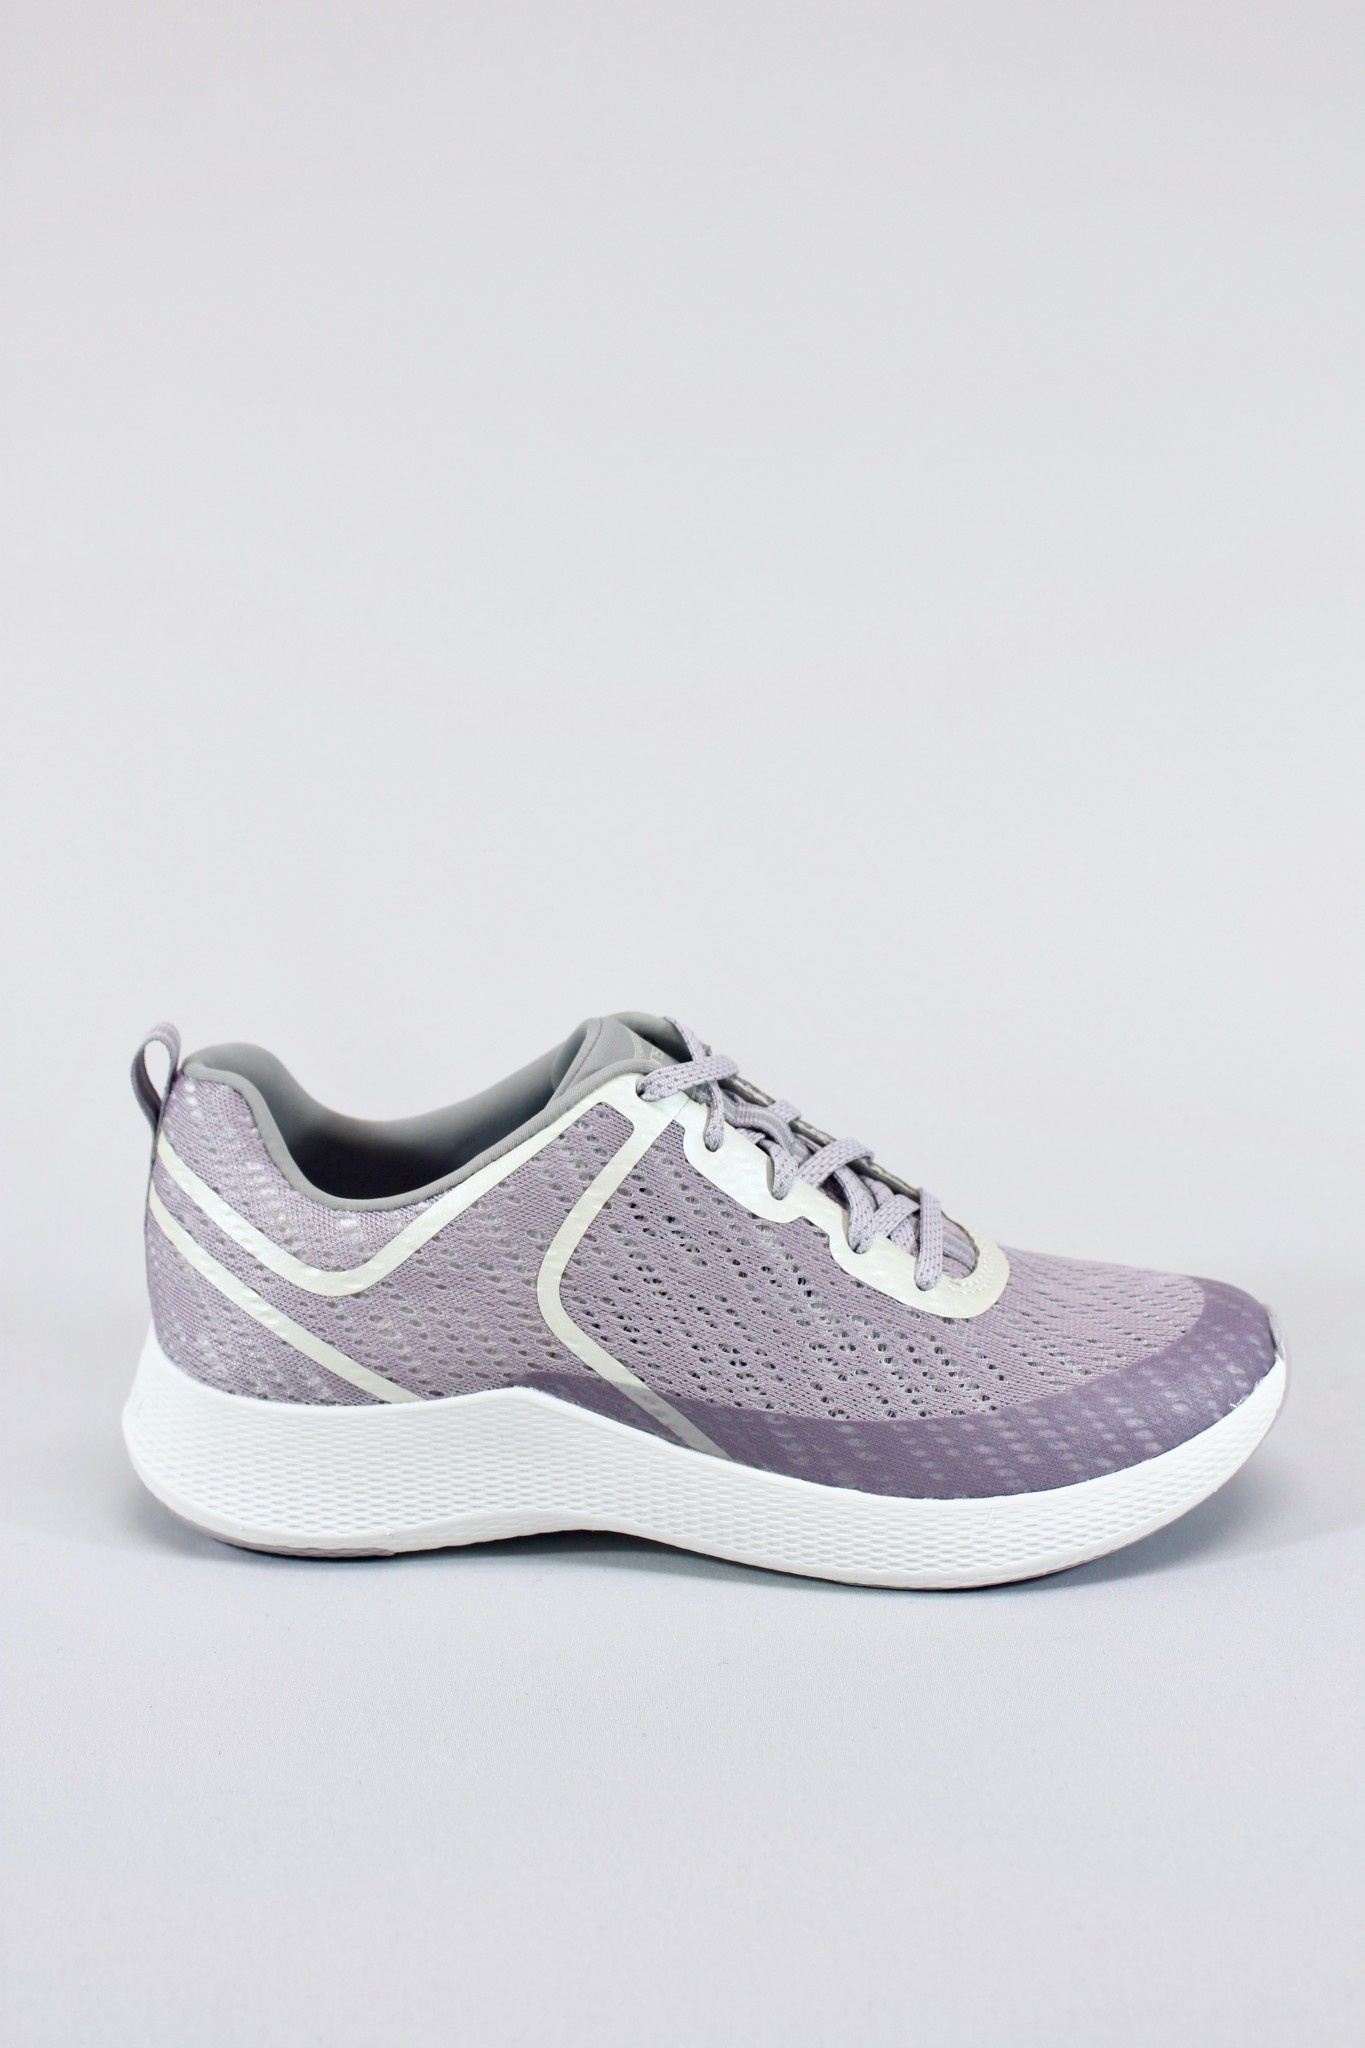 Rotasole Women's Walk Walking Shoes 6 LILAC/WHITE Rotating Sole Sneakers 